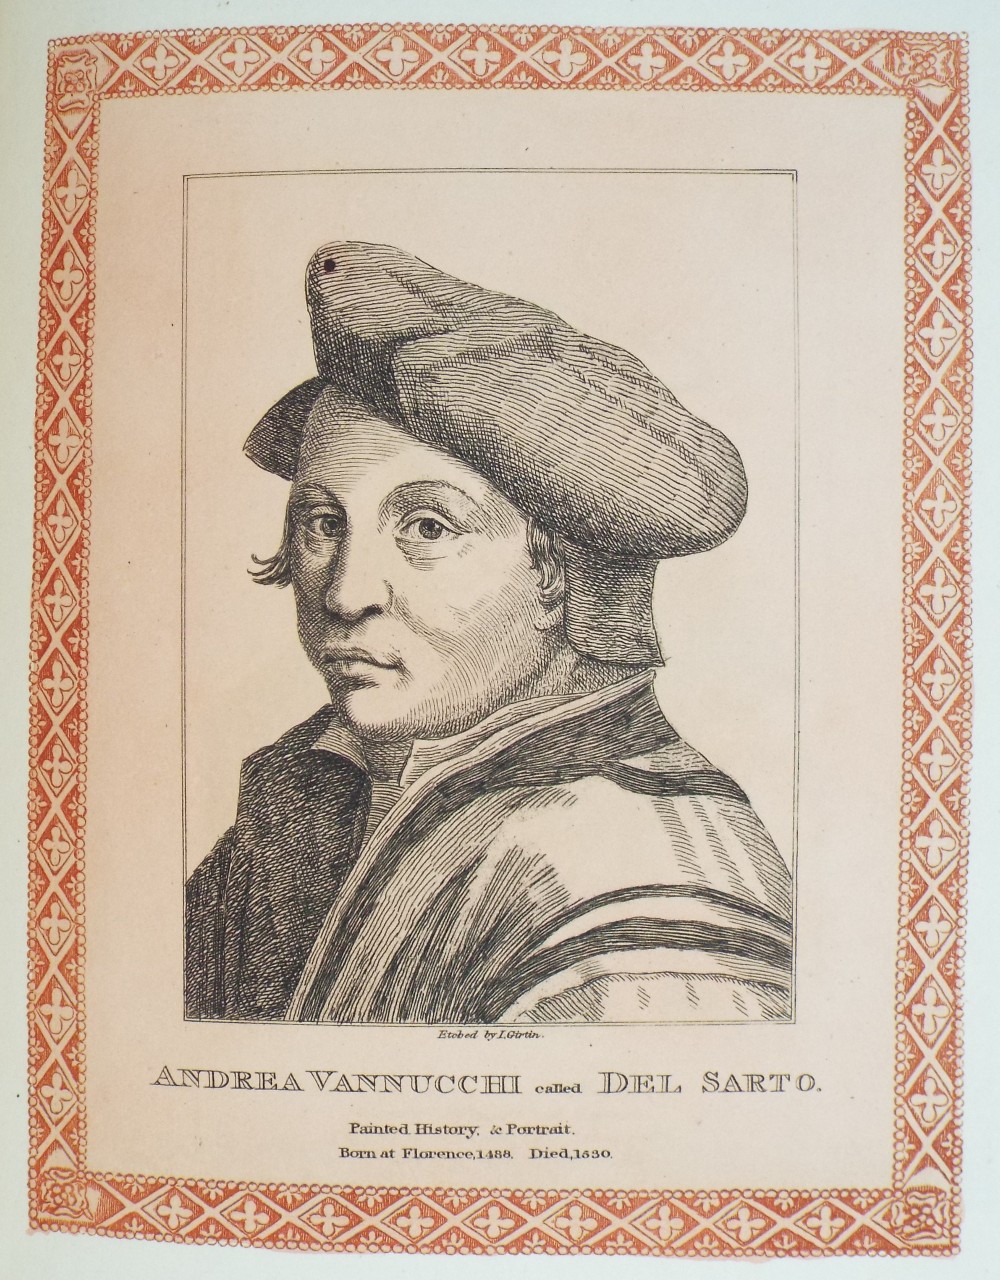 Etching - Andrea Vannucchi called Del Sarto. - Girtin